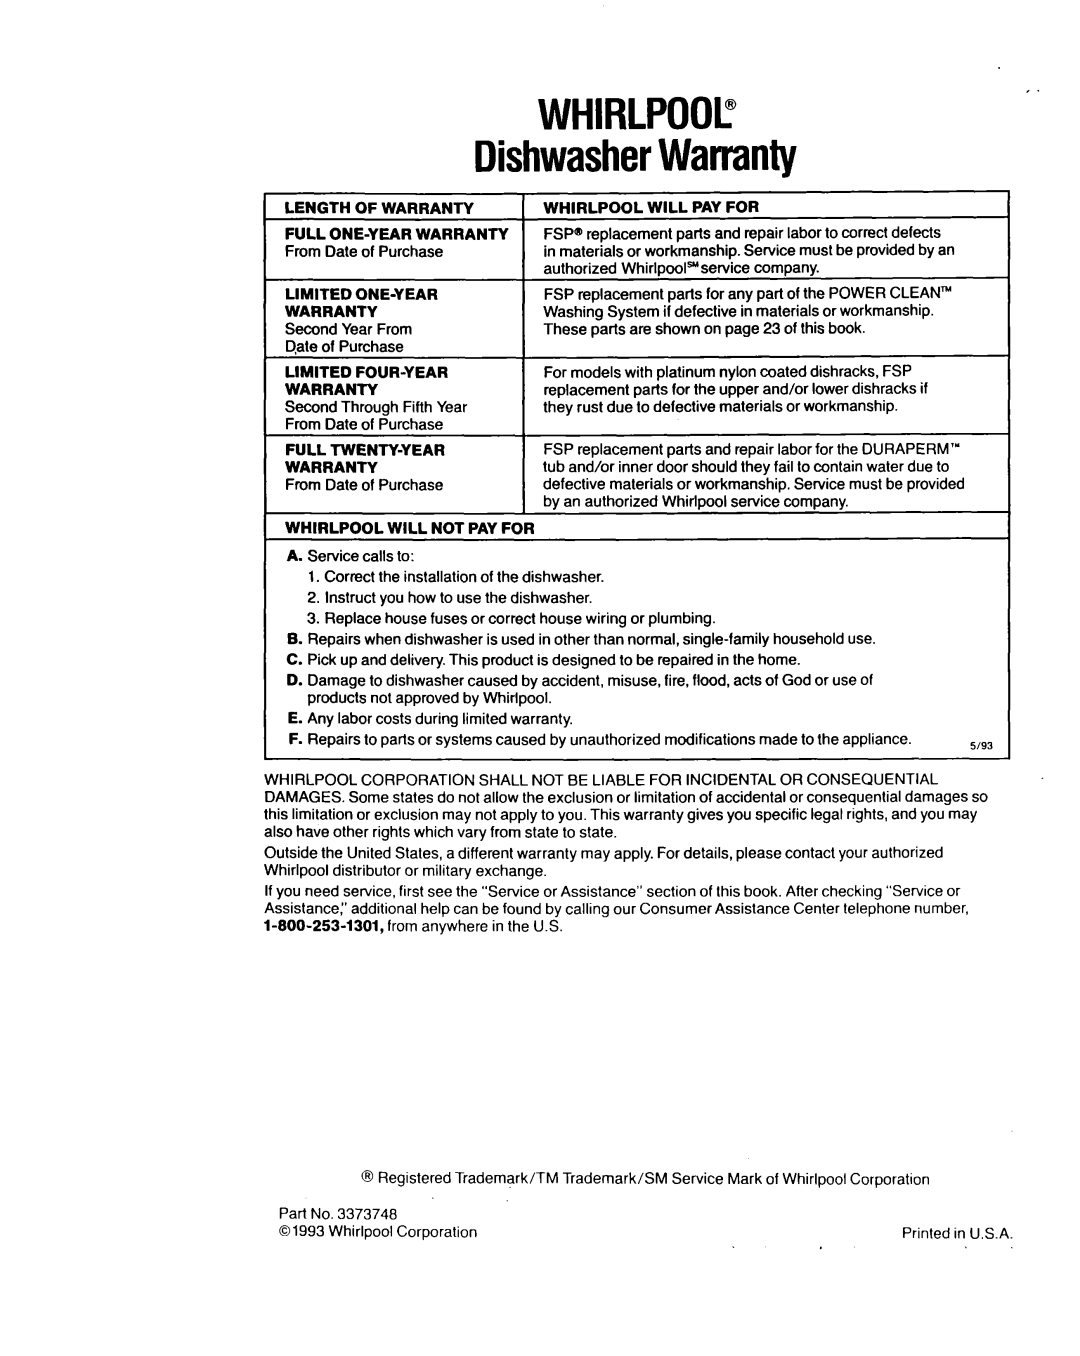 Whirlpool 8700 manual WHIRLPOOL” DishwasherWarranty 